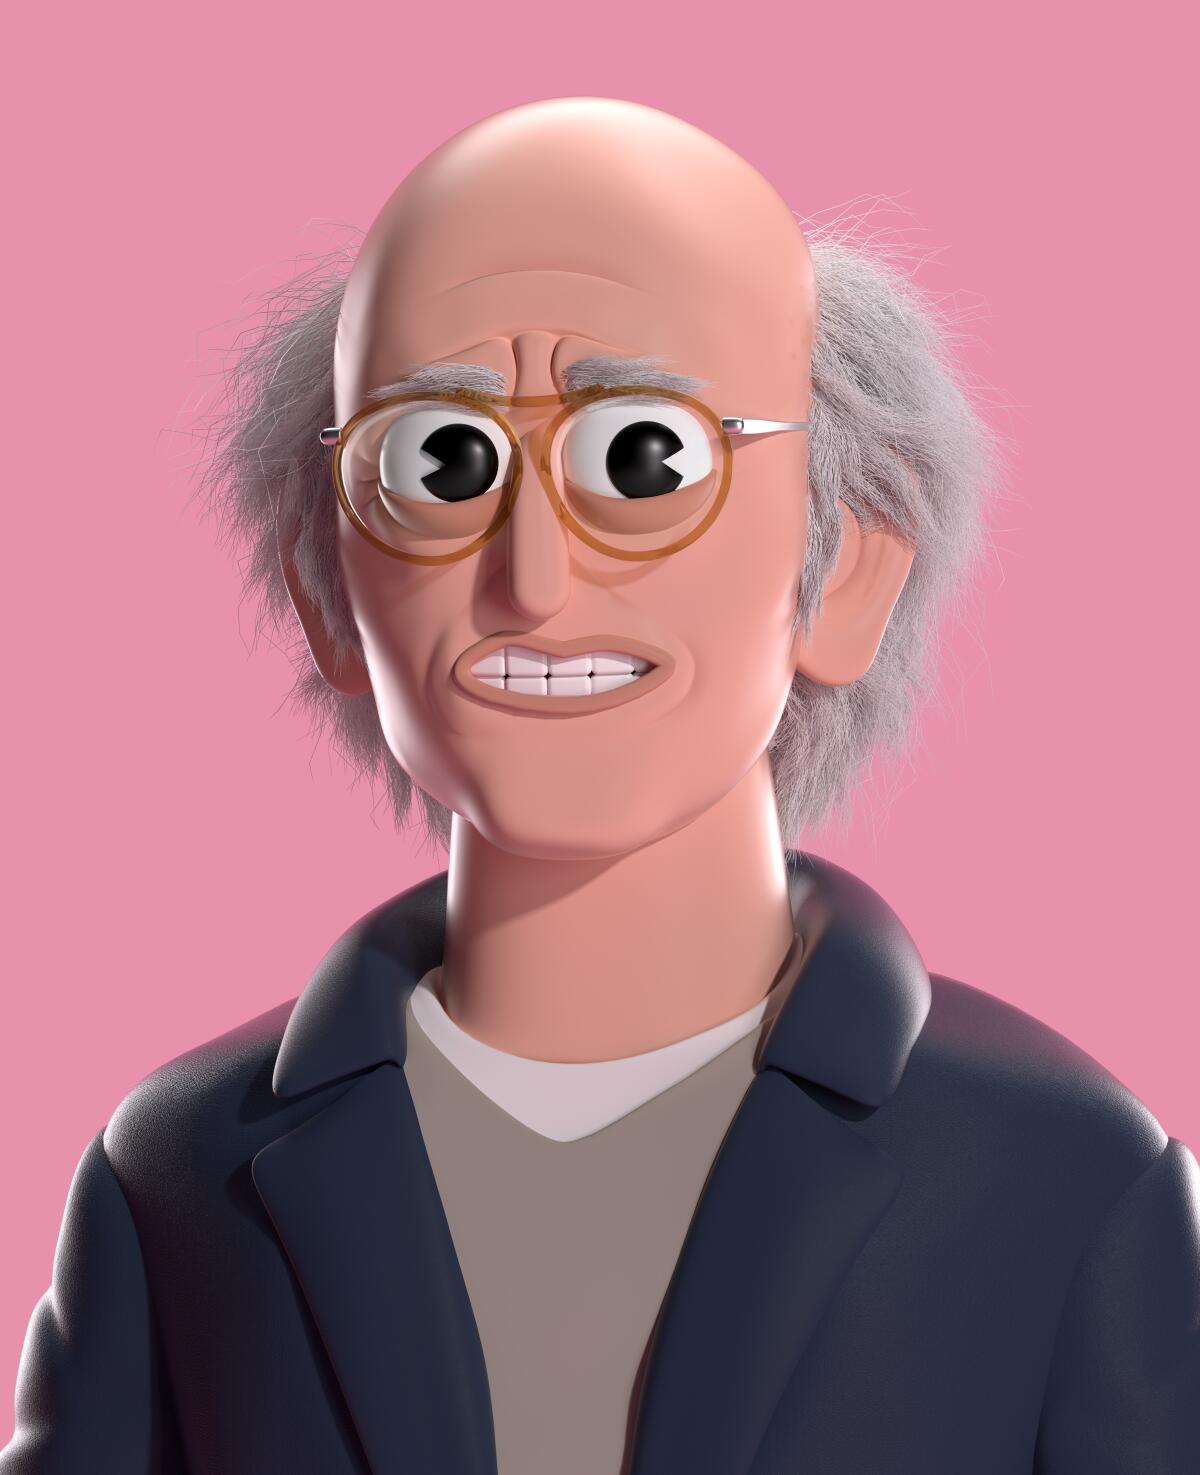 An illustration of Larry David looking cringe.